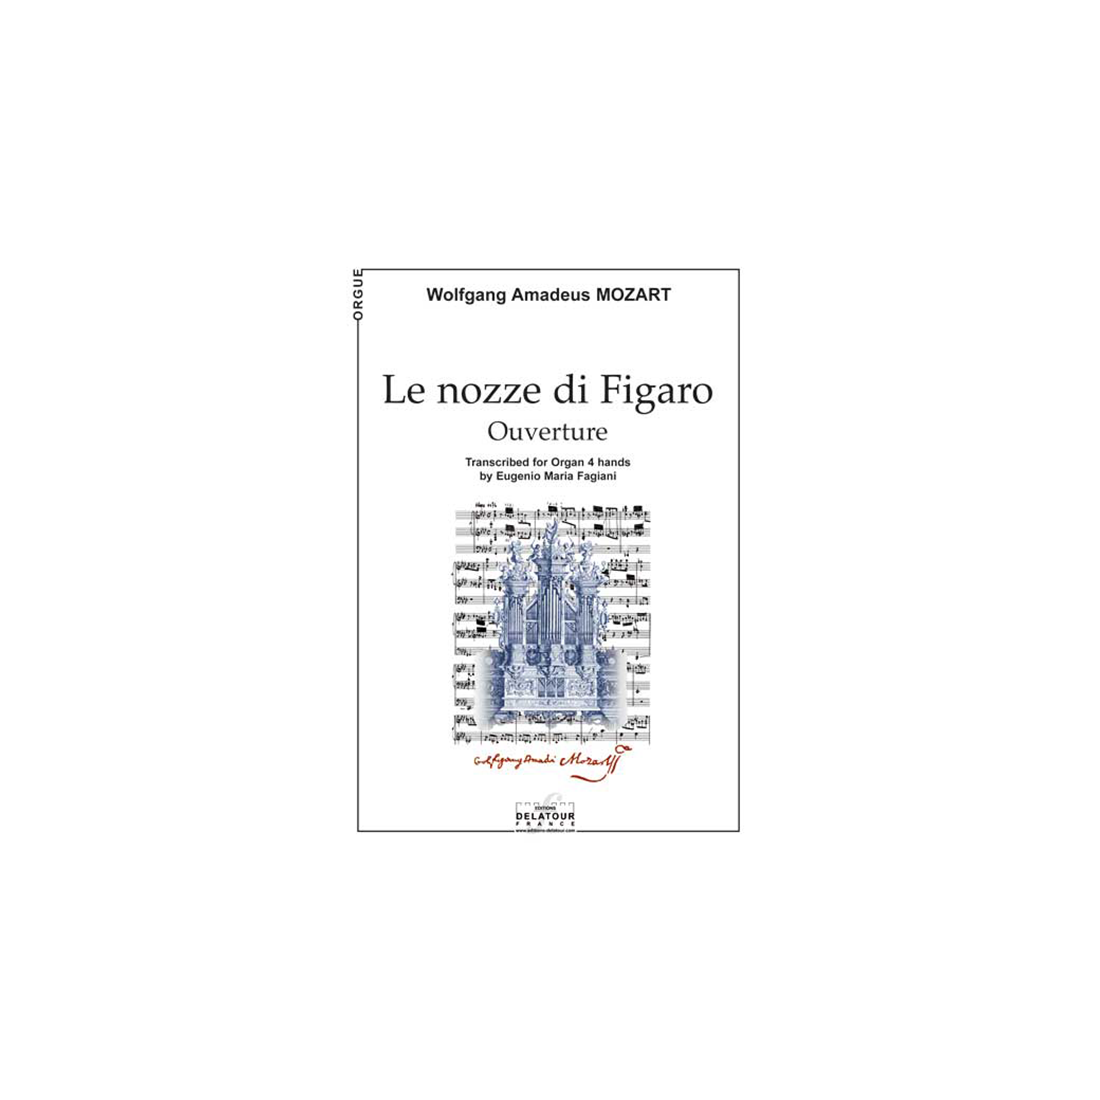 Le nozze di Figaro (Ouvertüre) für Orgel zu 4 Hände